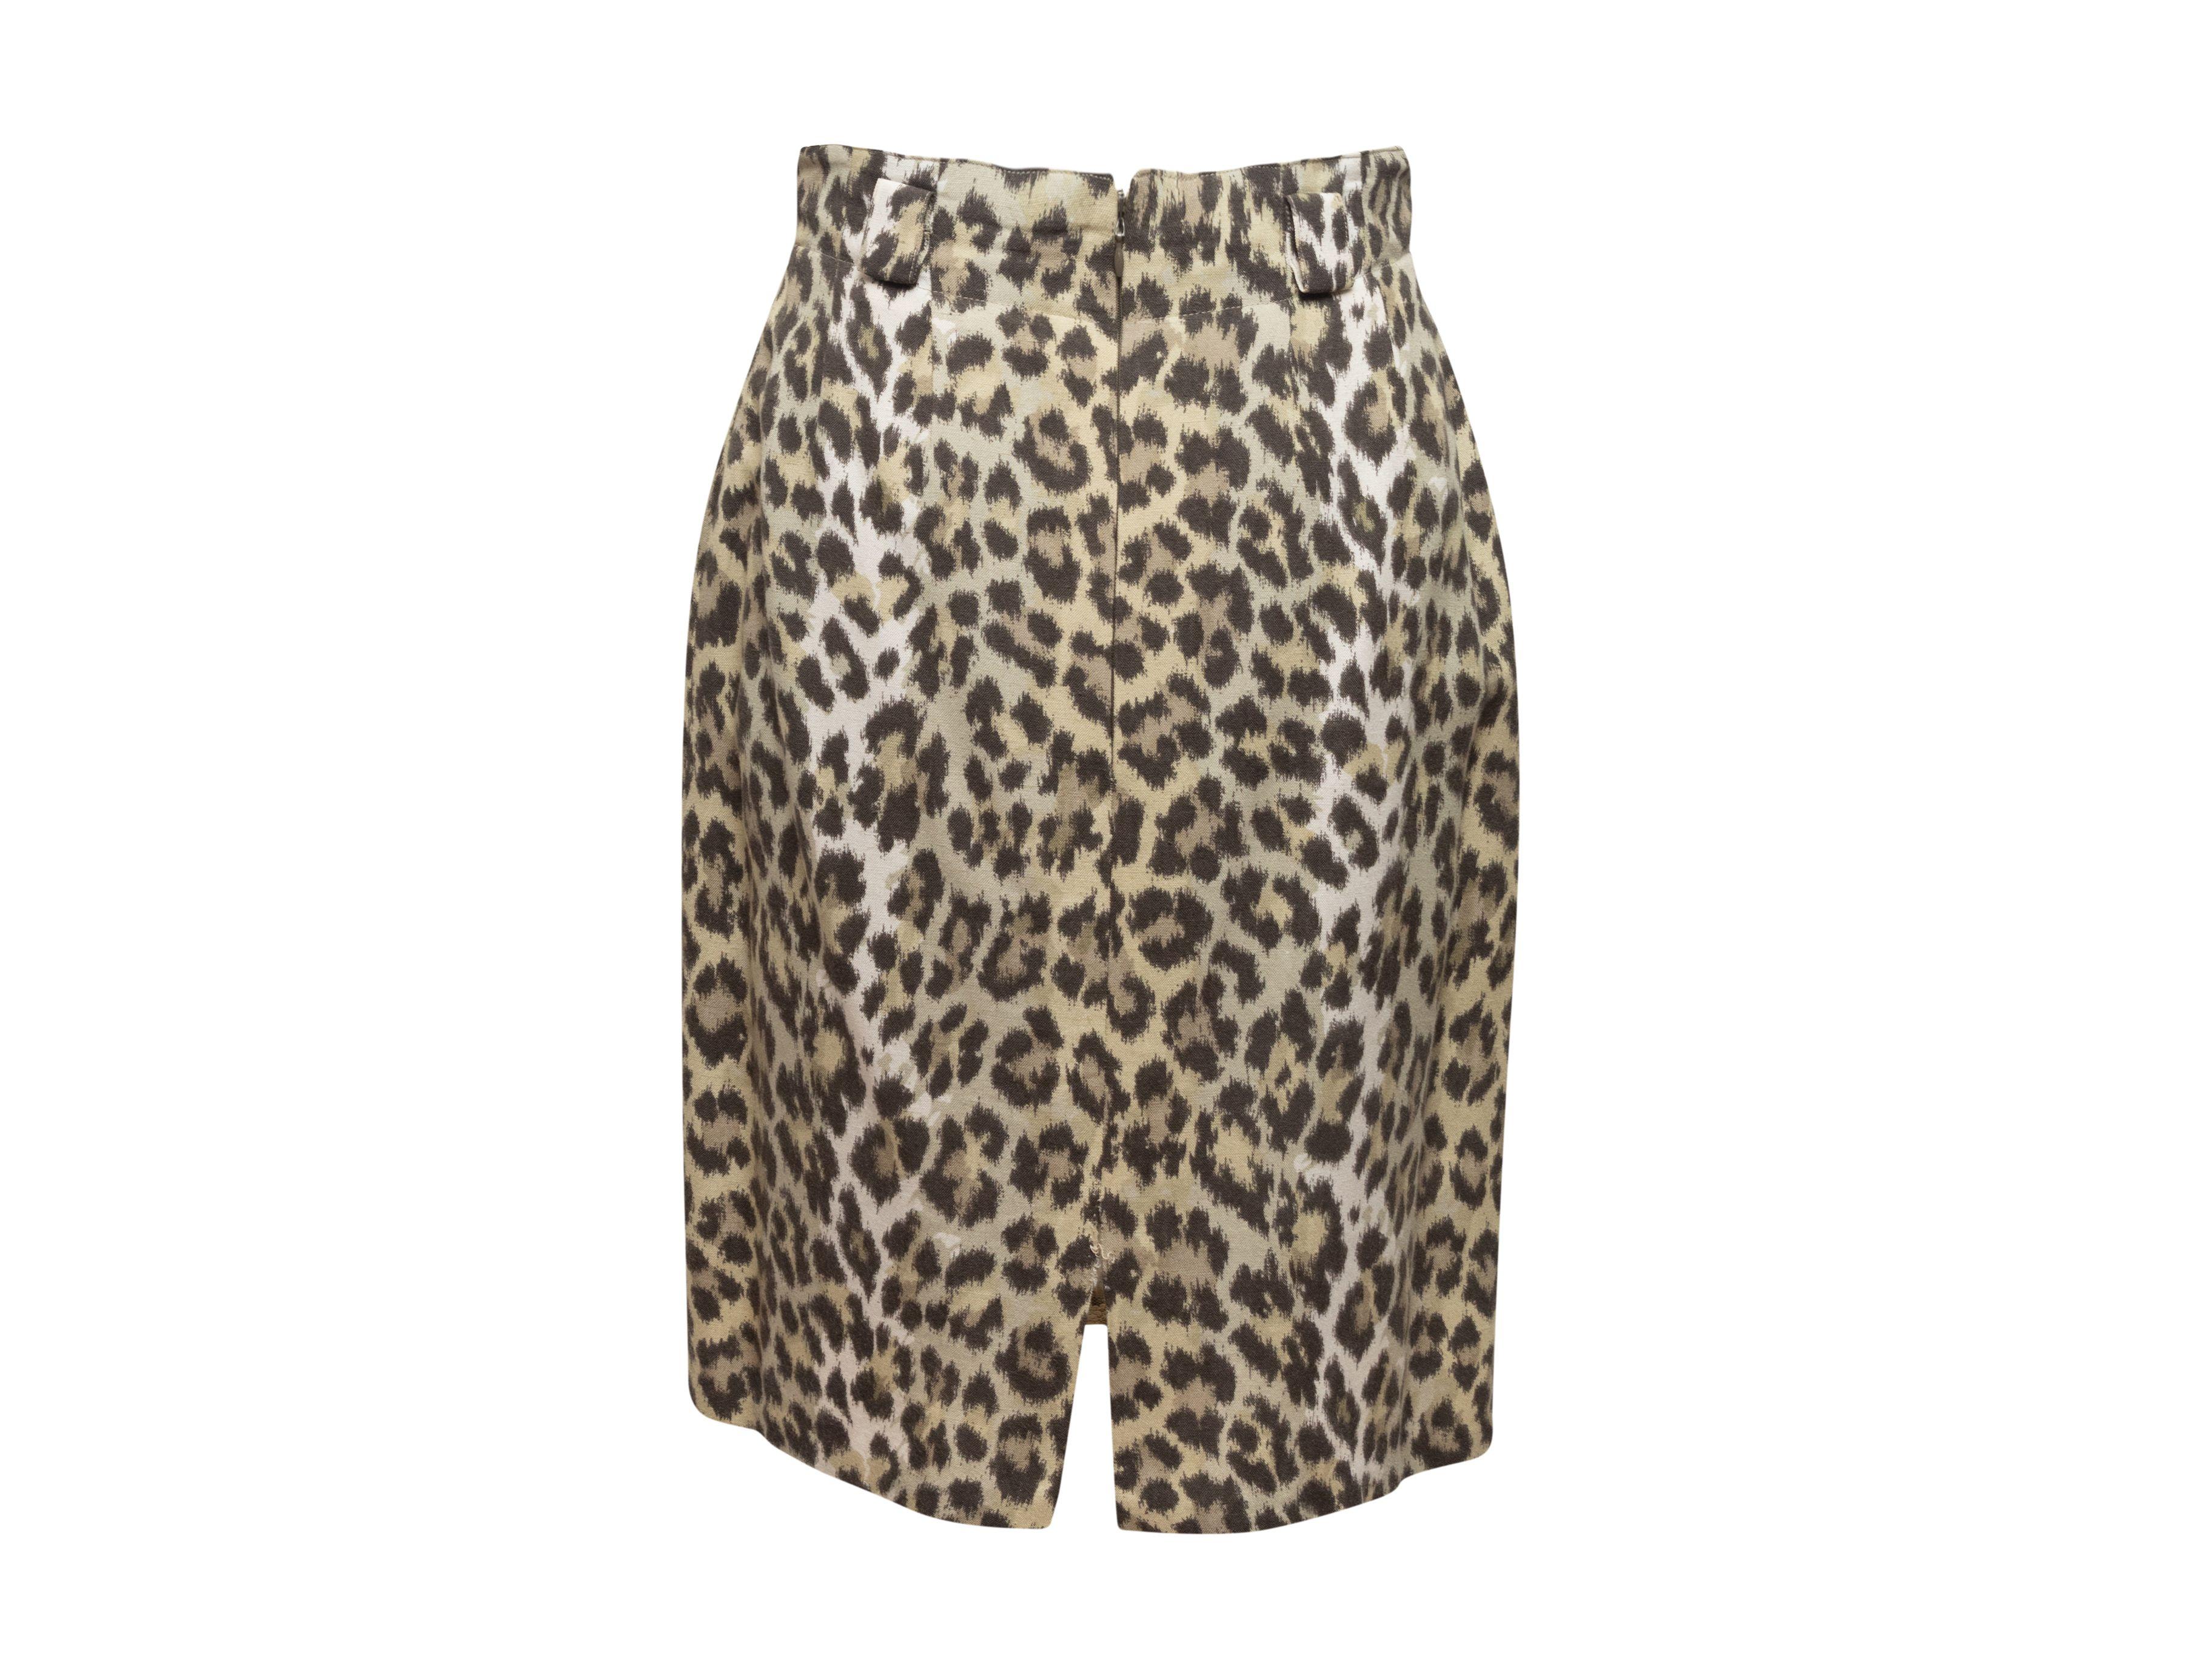 Women's Jean Louis Scherrer Tan & Black Leopard Print Skirt Suit For Sale